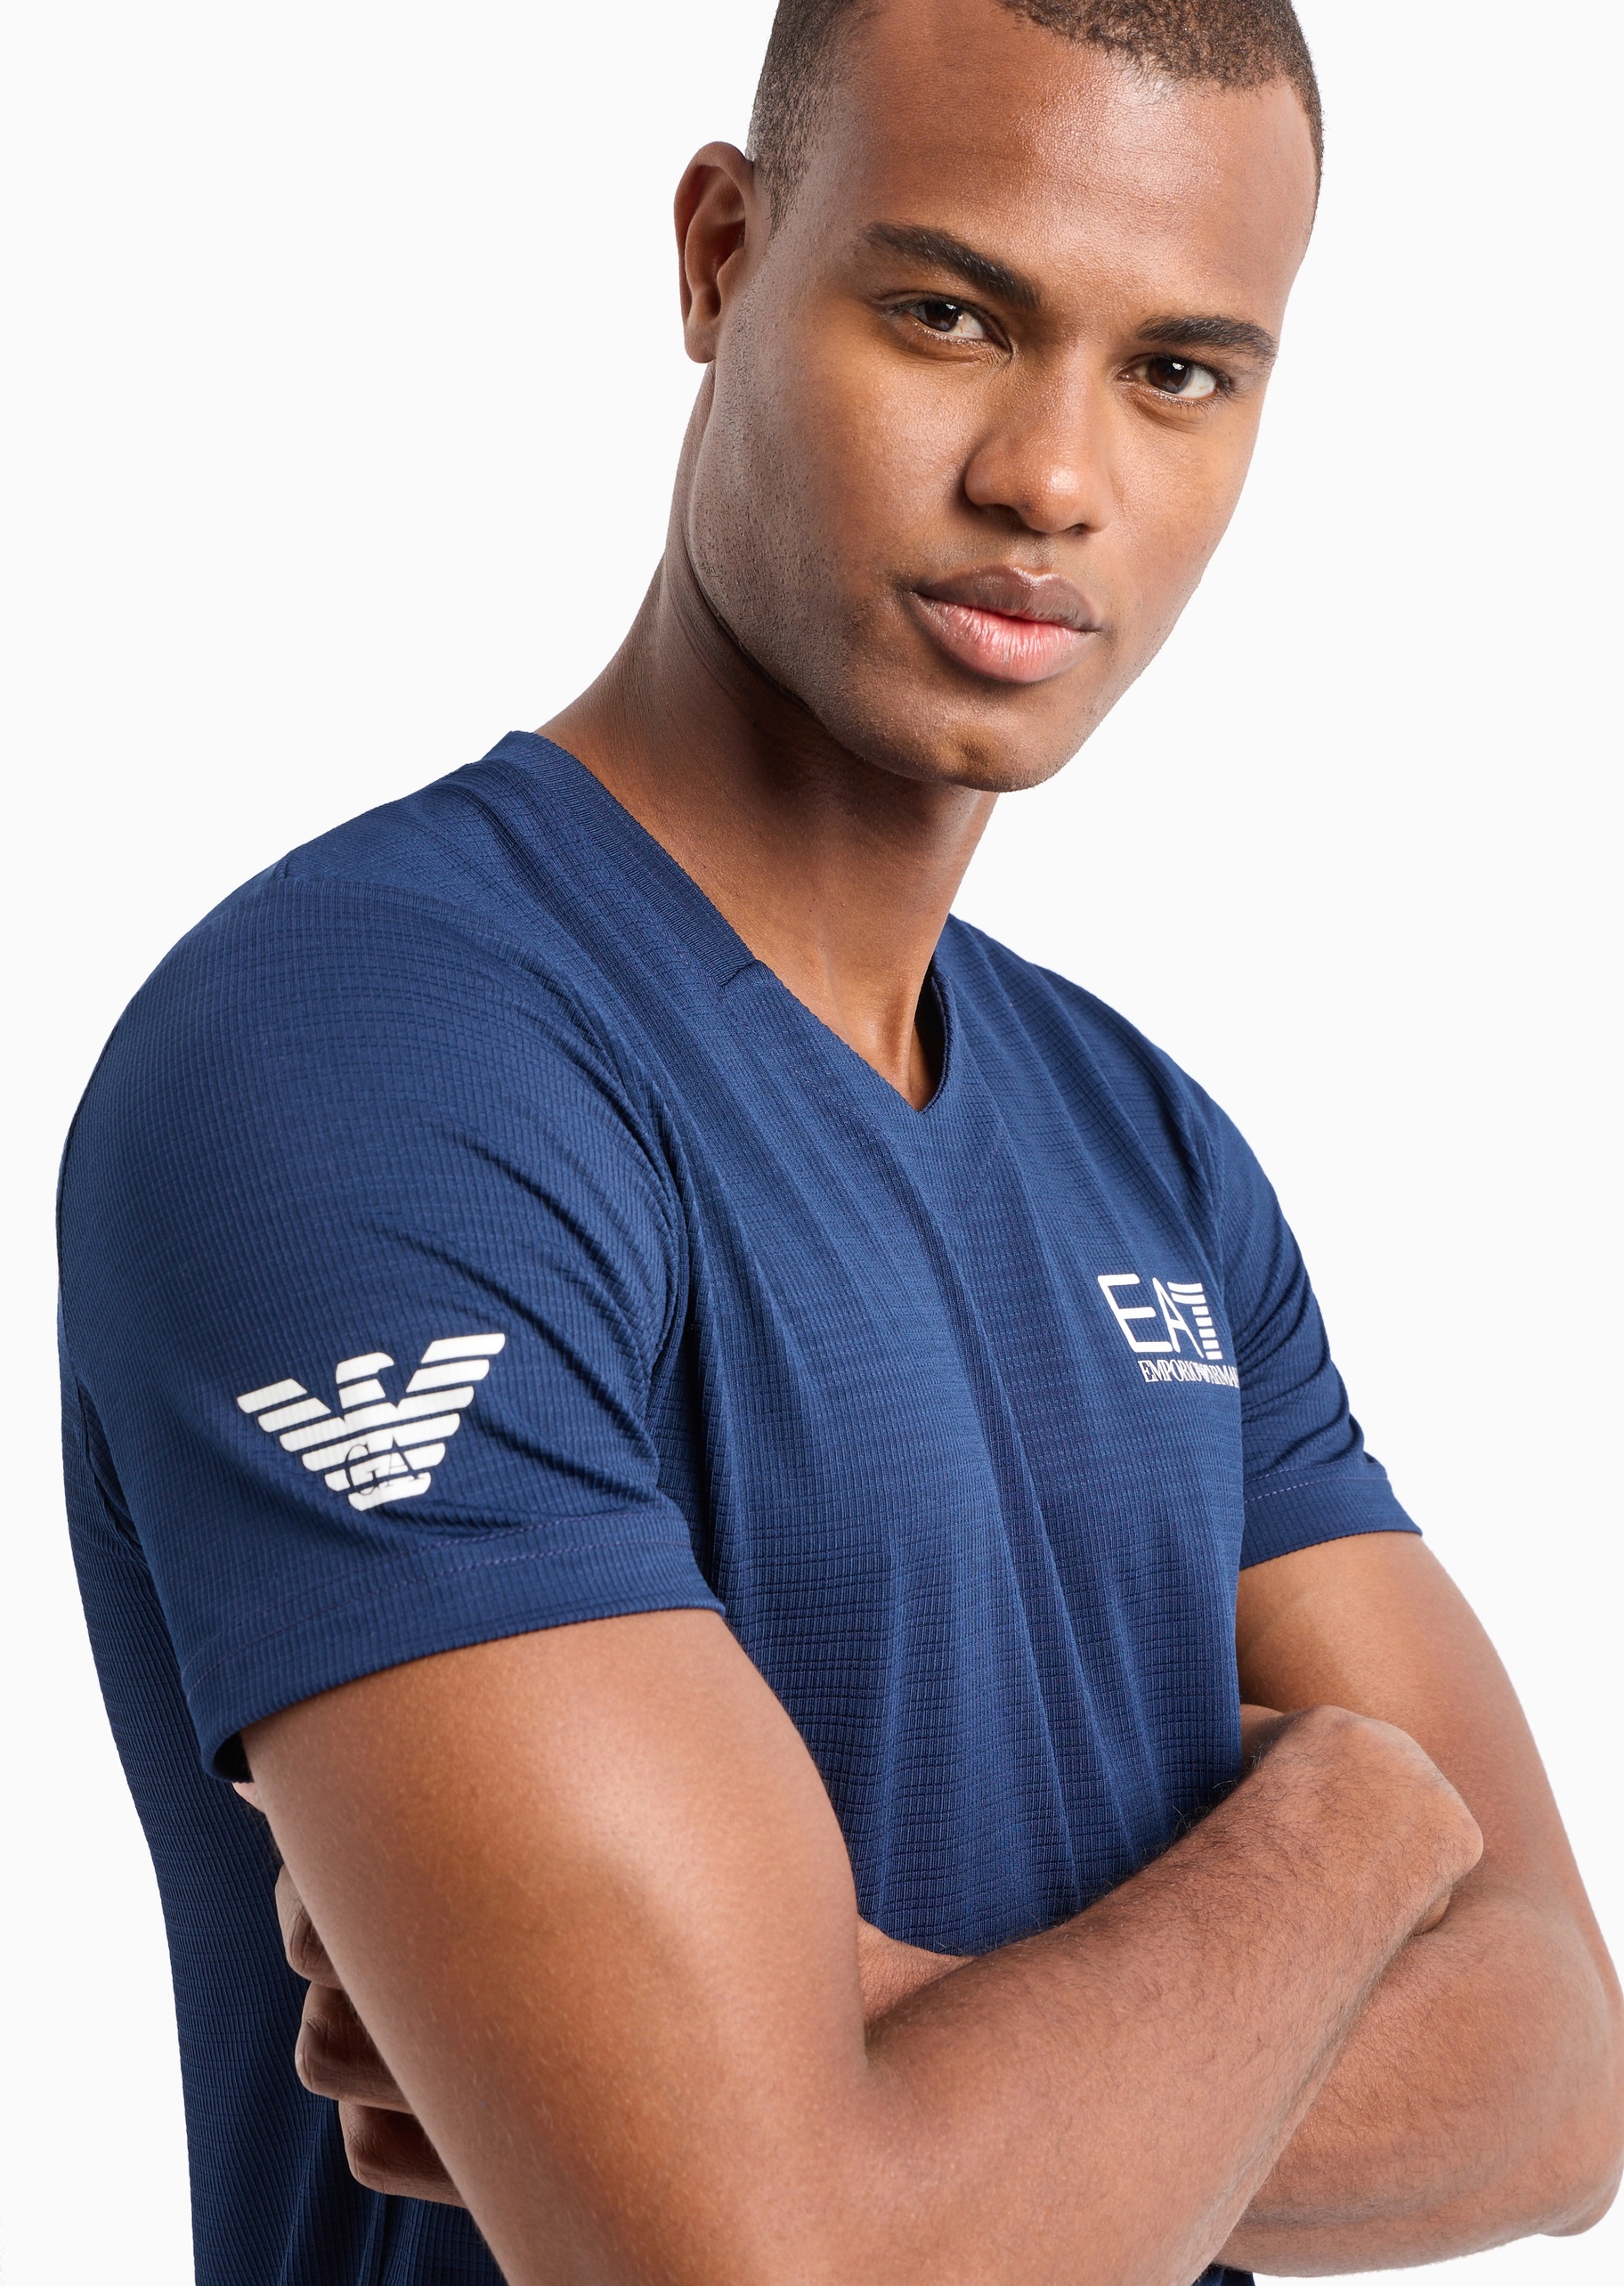 EA7 男士VENTUS 7弹力短袖V领网球T恤